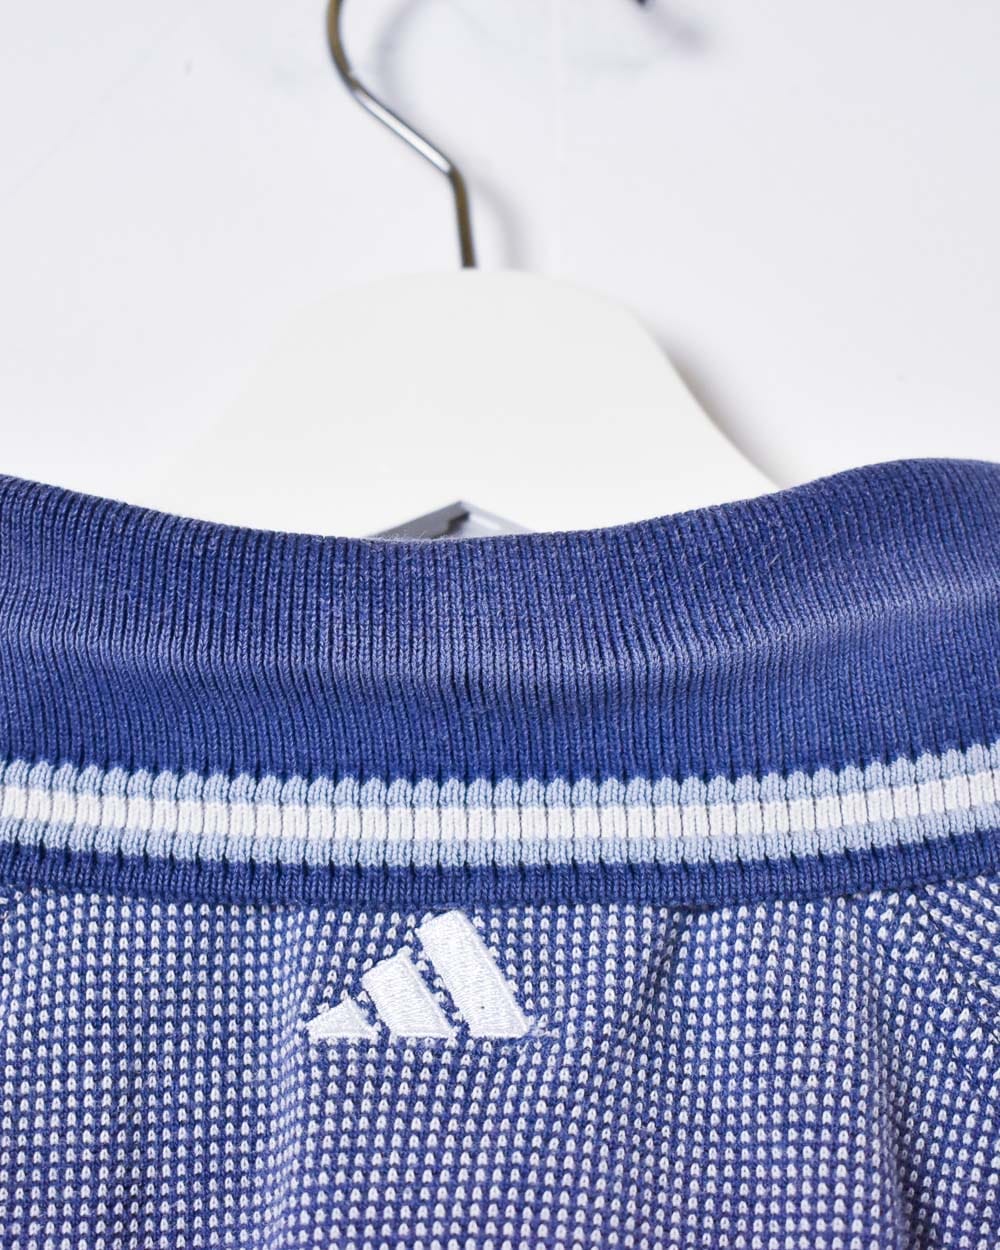 Blue Adidas 1/4 Zip Polo Shirt - Large